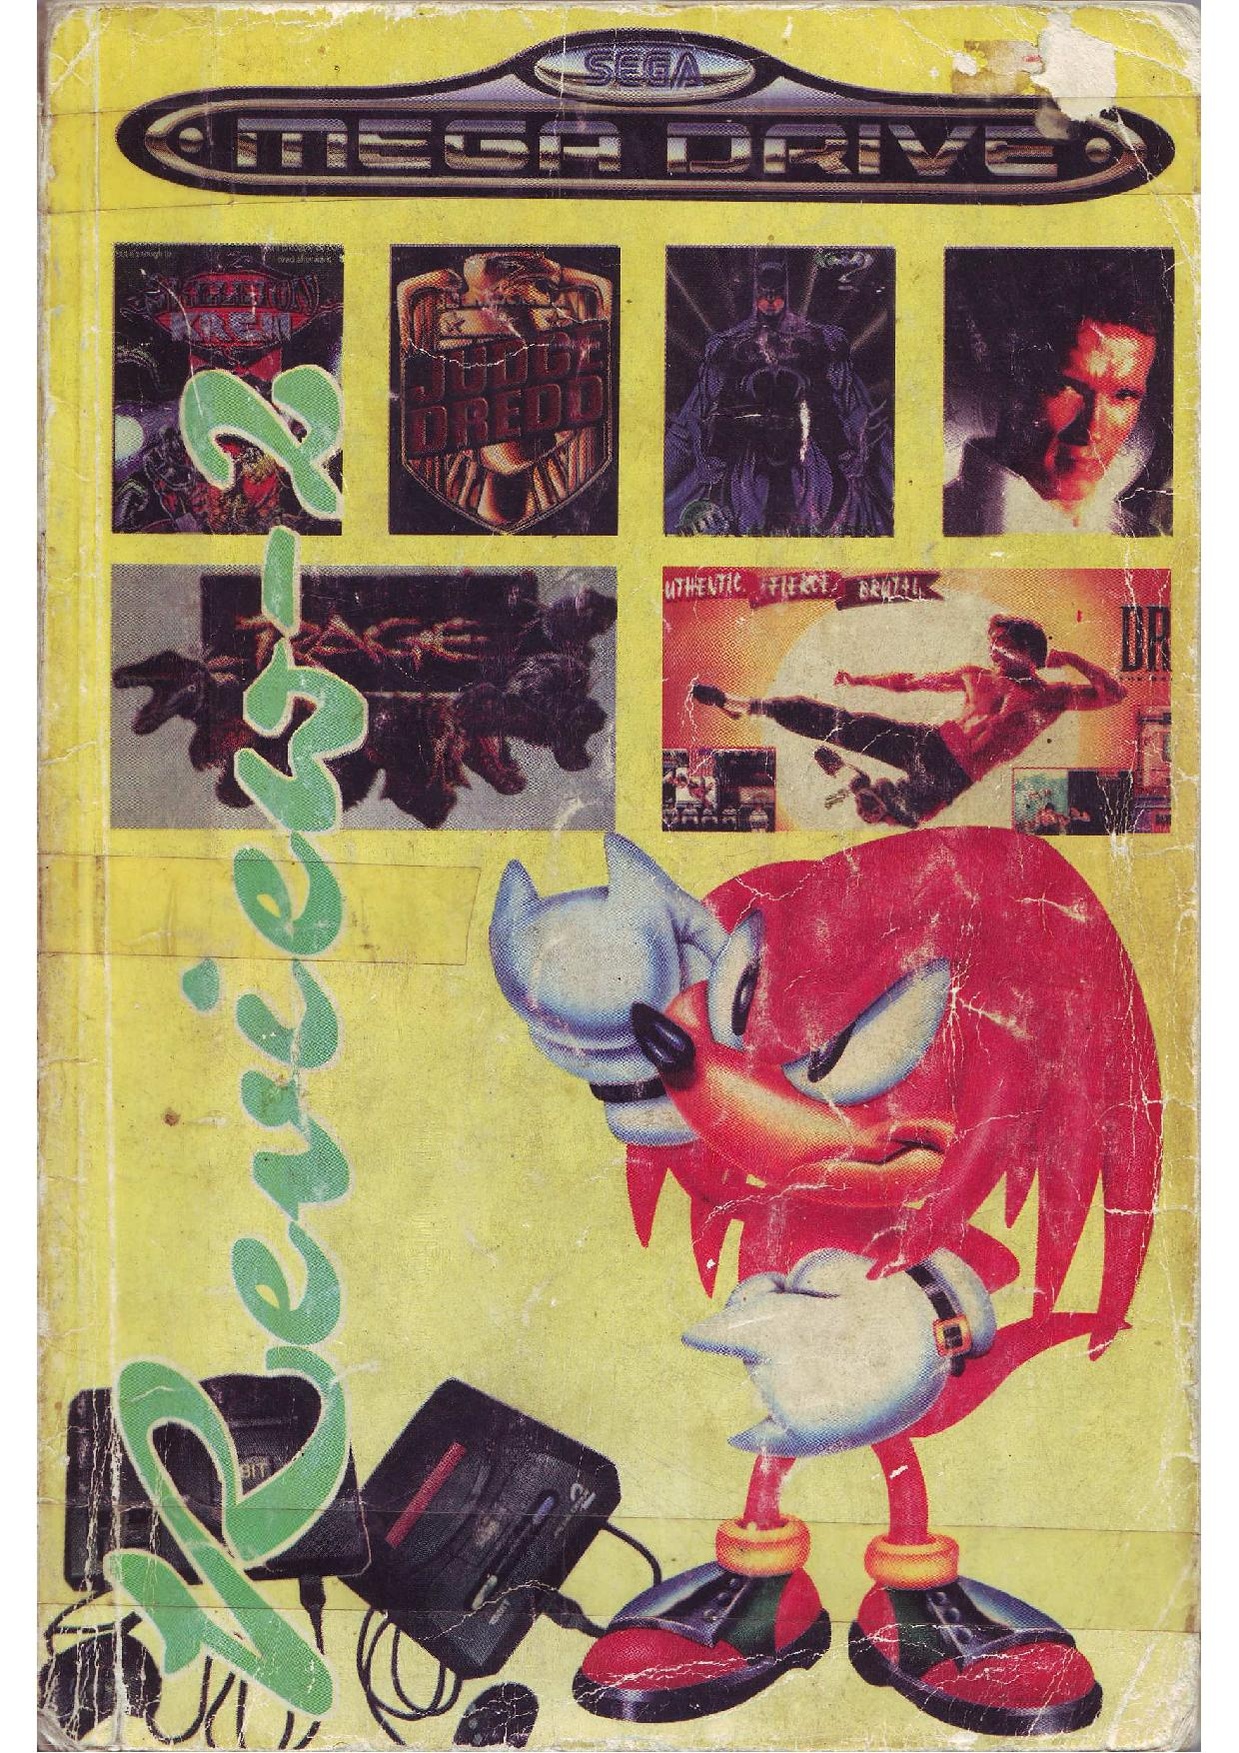 Sega Mega Drive Review 2 RU.pdf